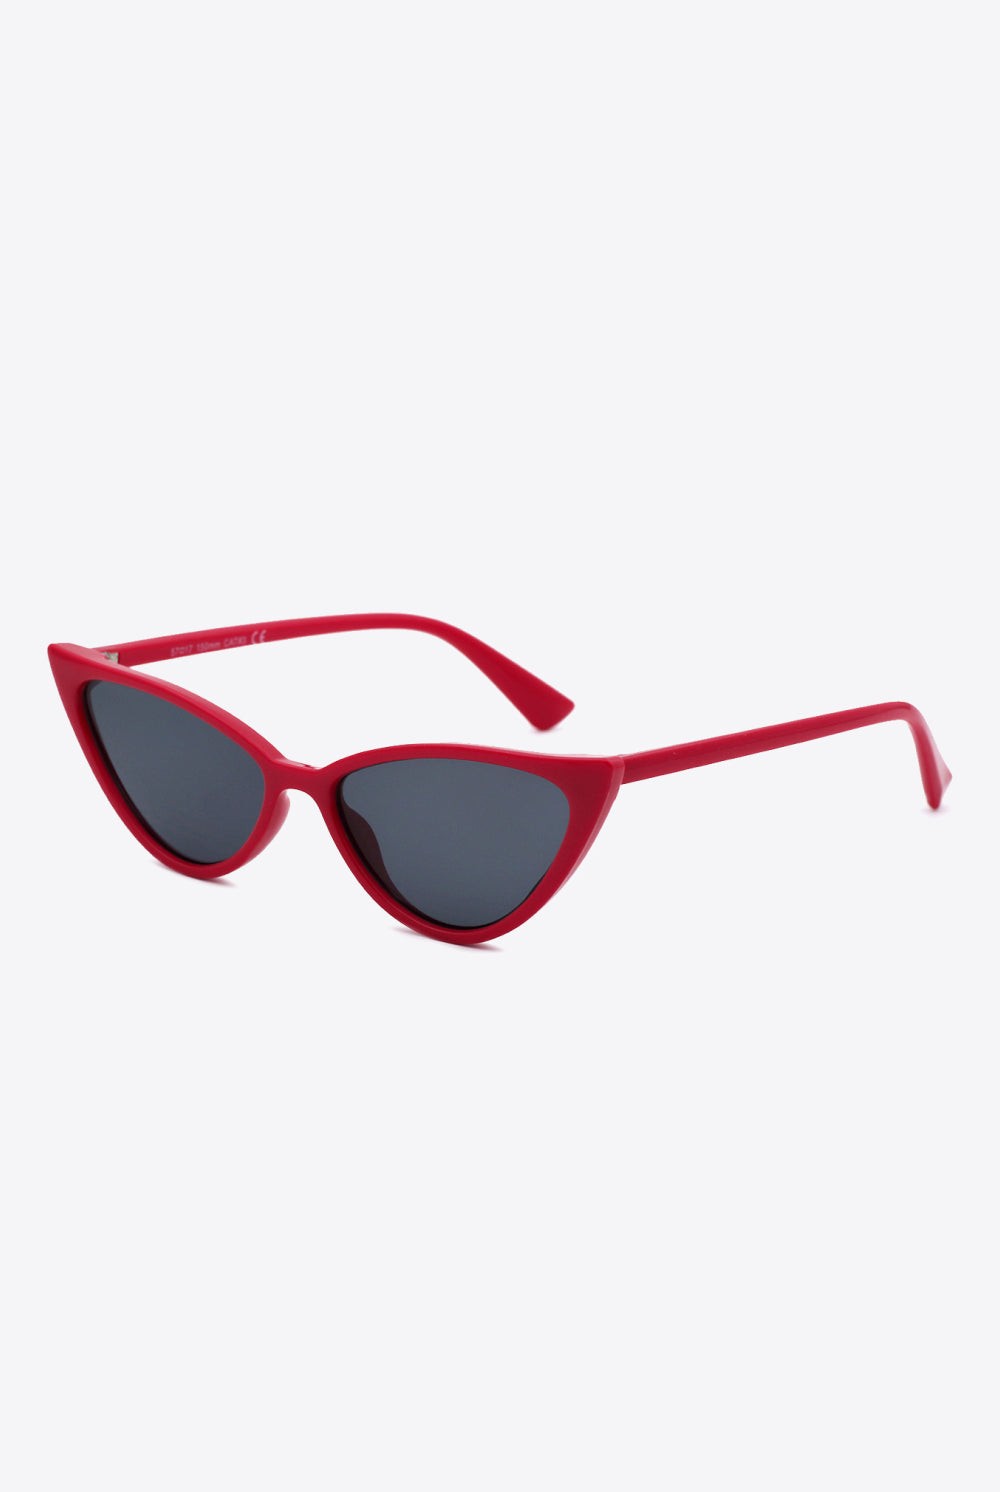 White Smoke Skipped A Beat Polycarbonate Cat-Eye Sunglasses- Red Sunglasses